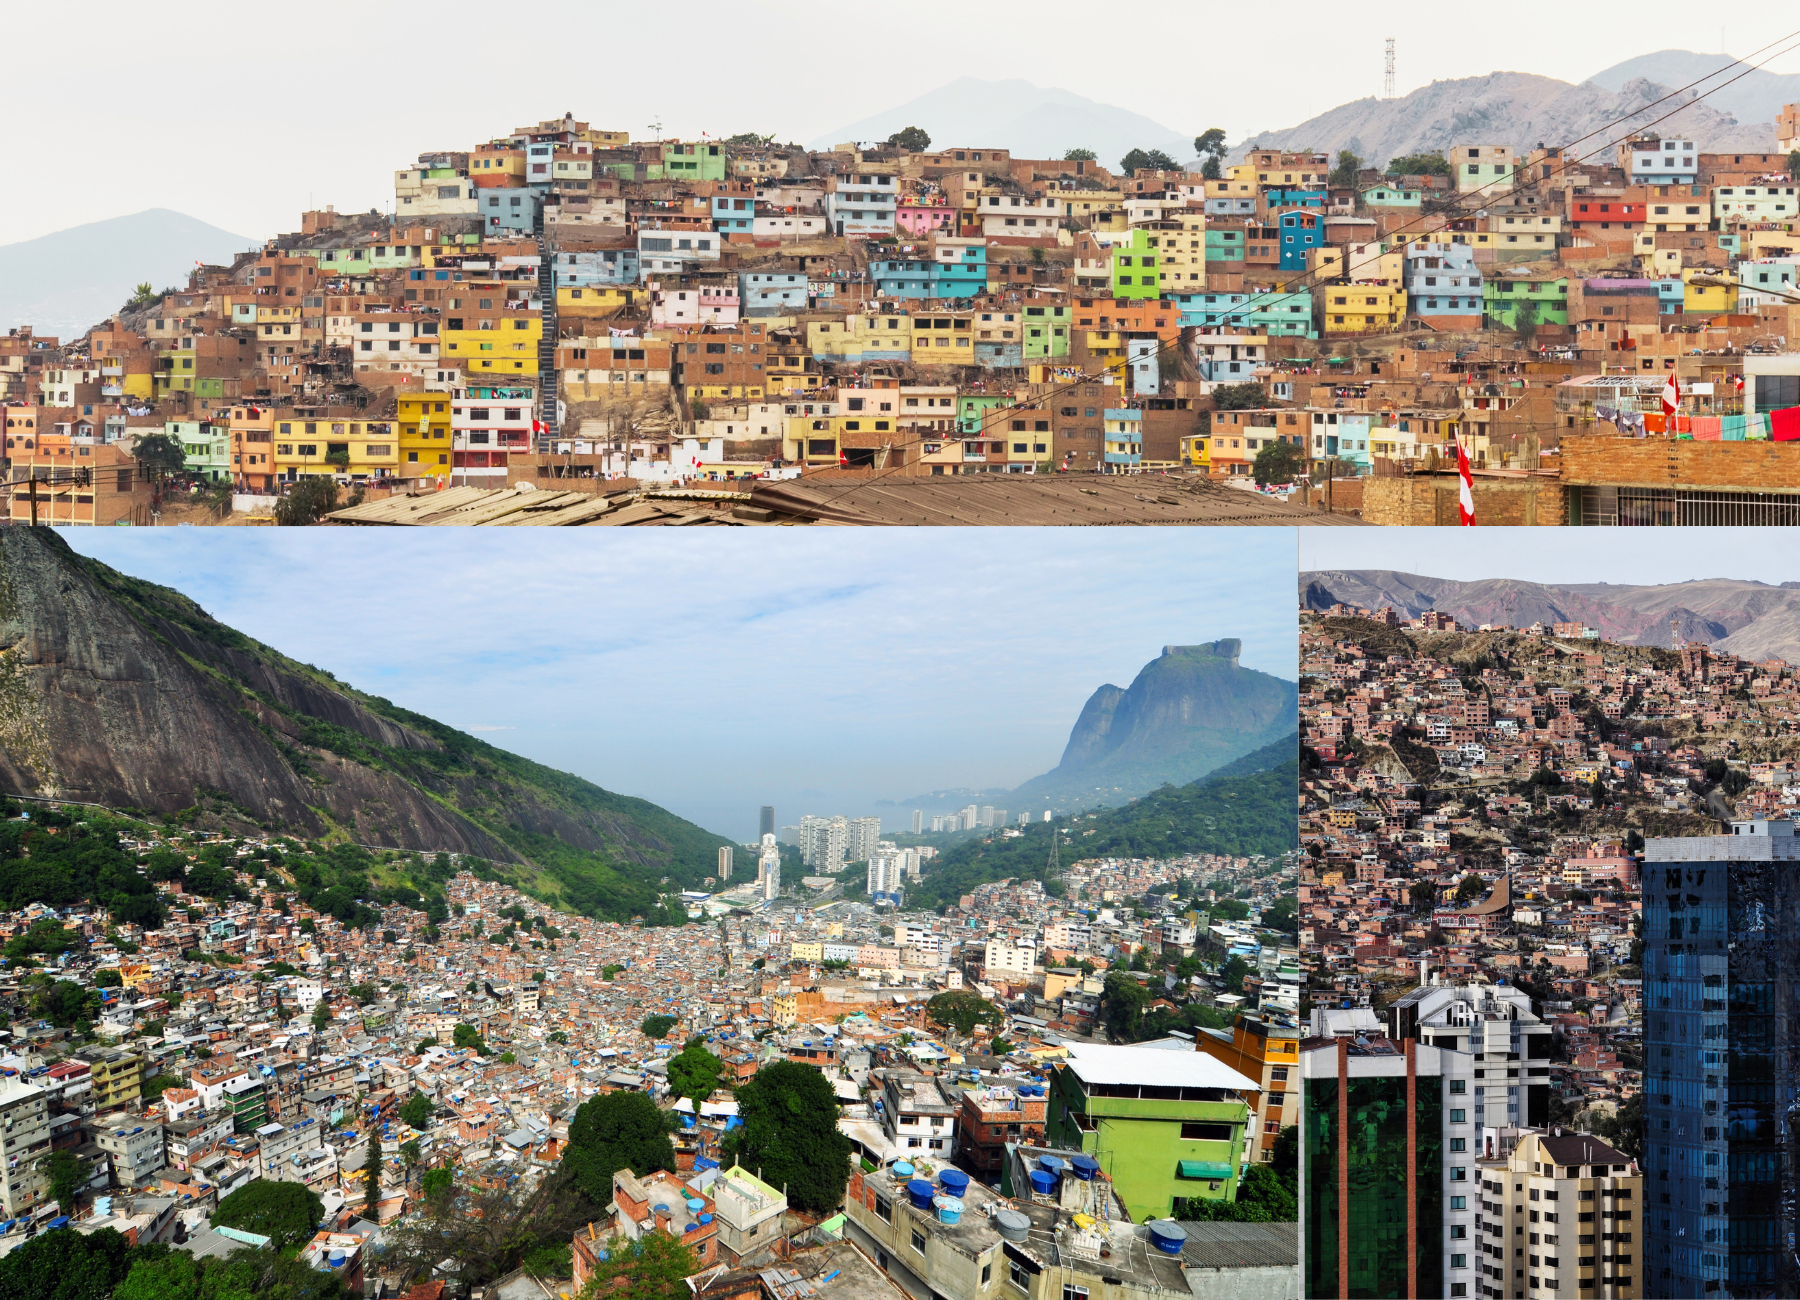 Slum-Upgrading-Lessons-from-Brazil